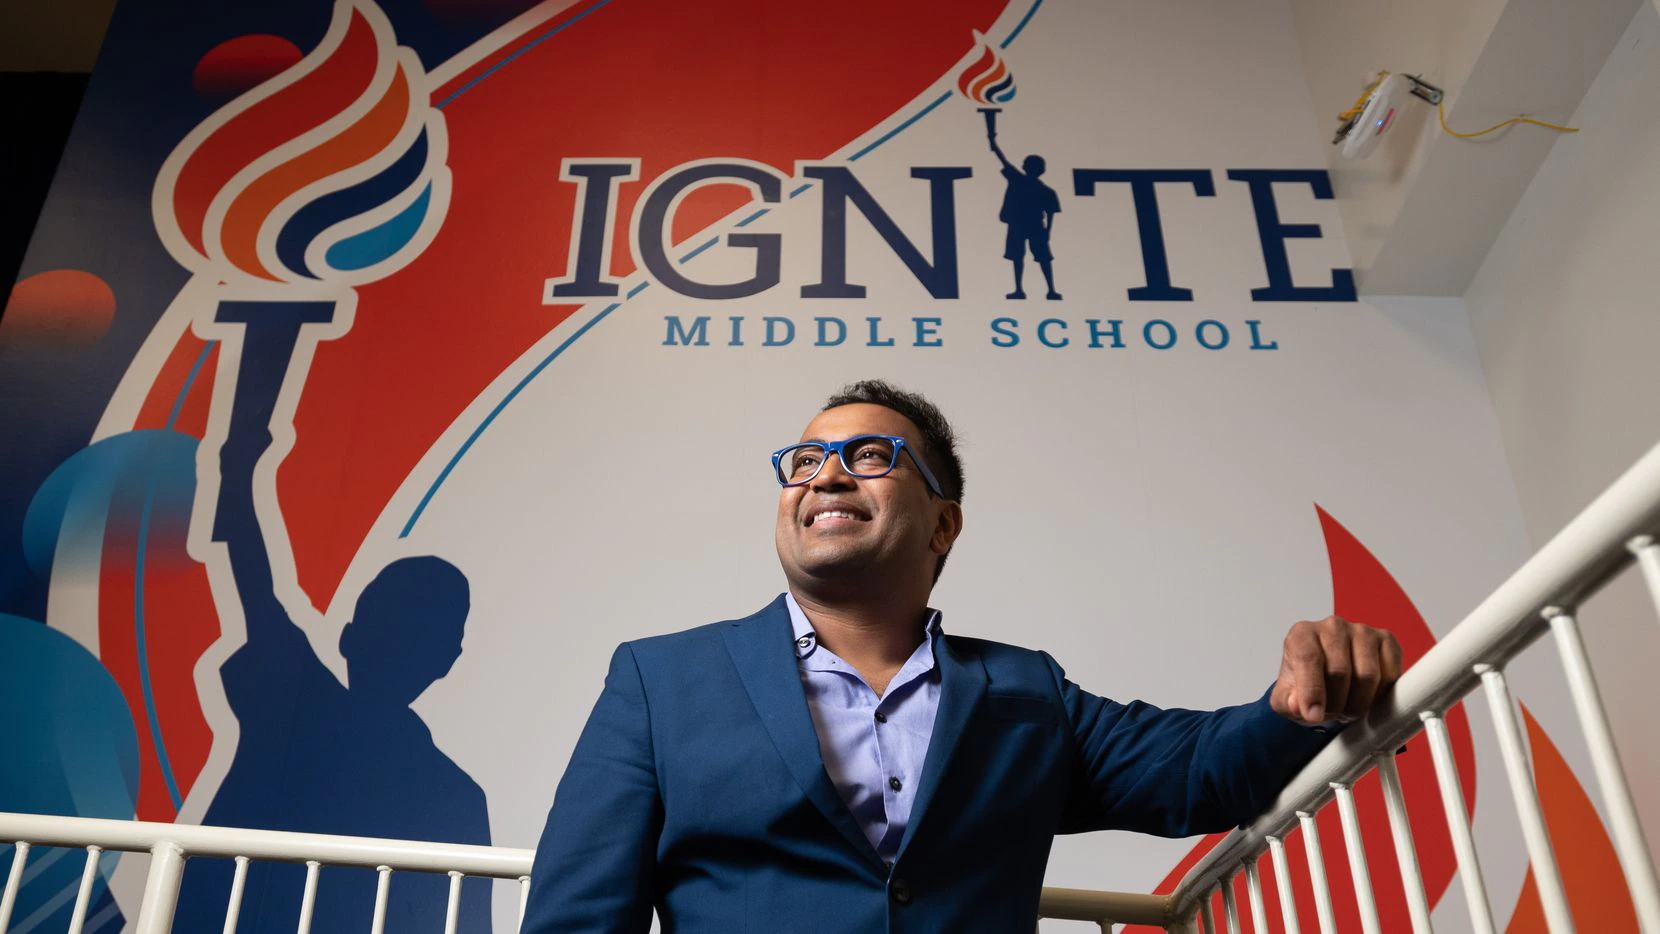 Dallas Teacher Selected for TIME's Innovative Teachers List